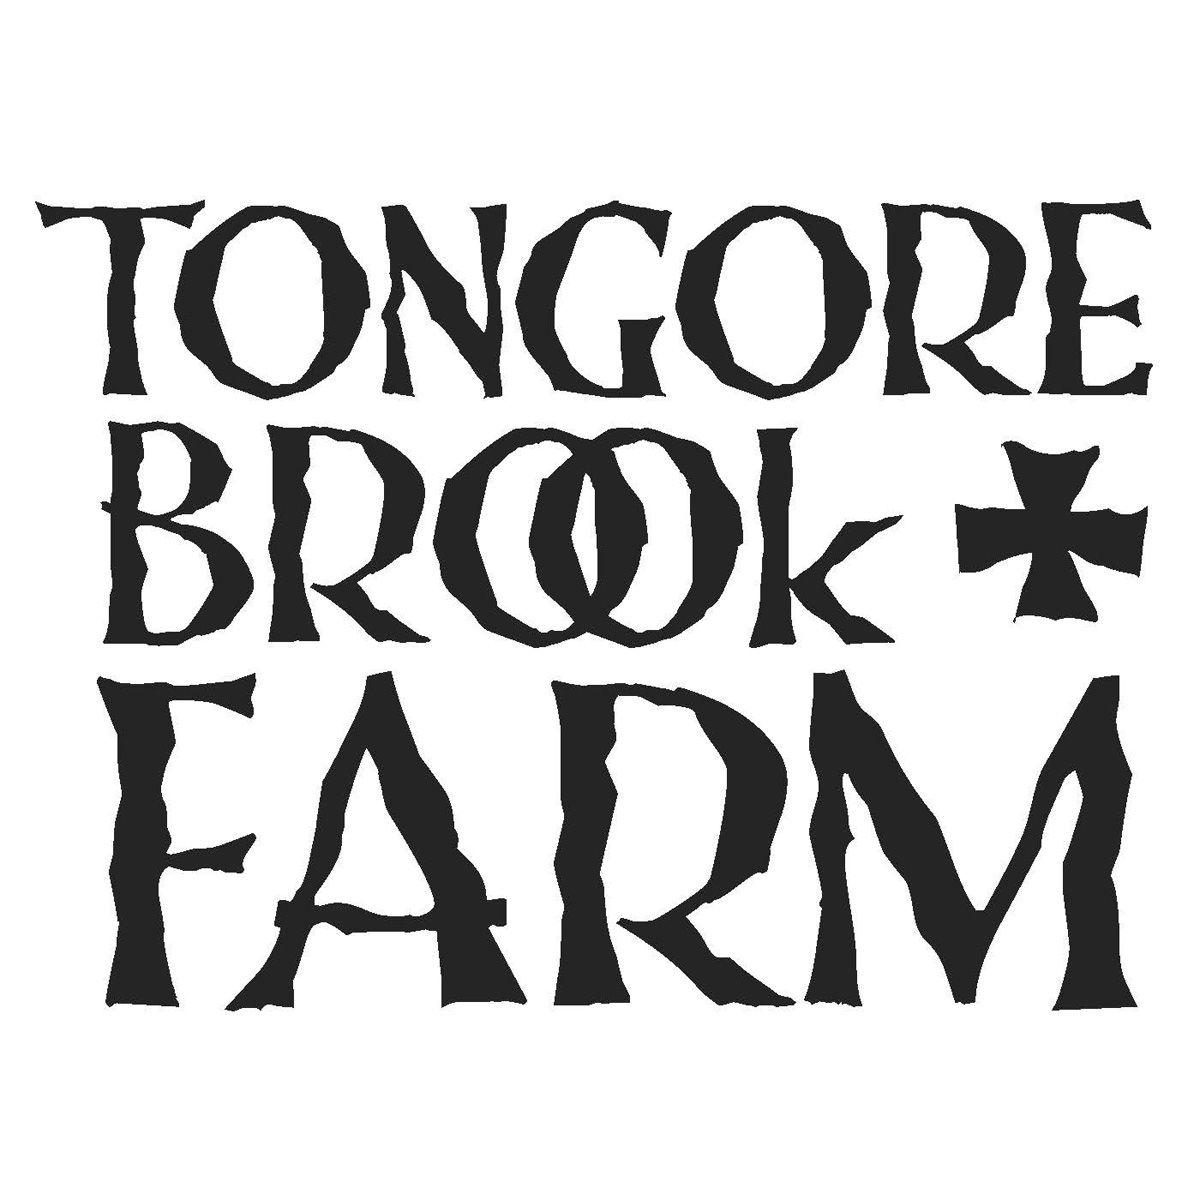 Tongore Brook Farm logo